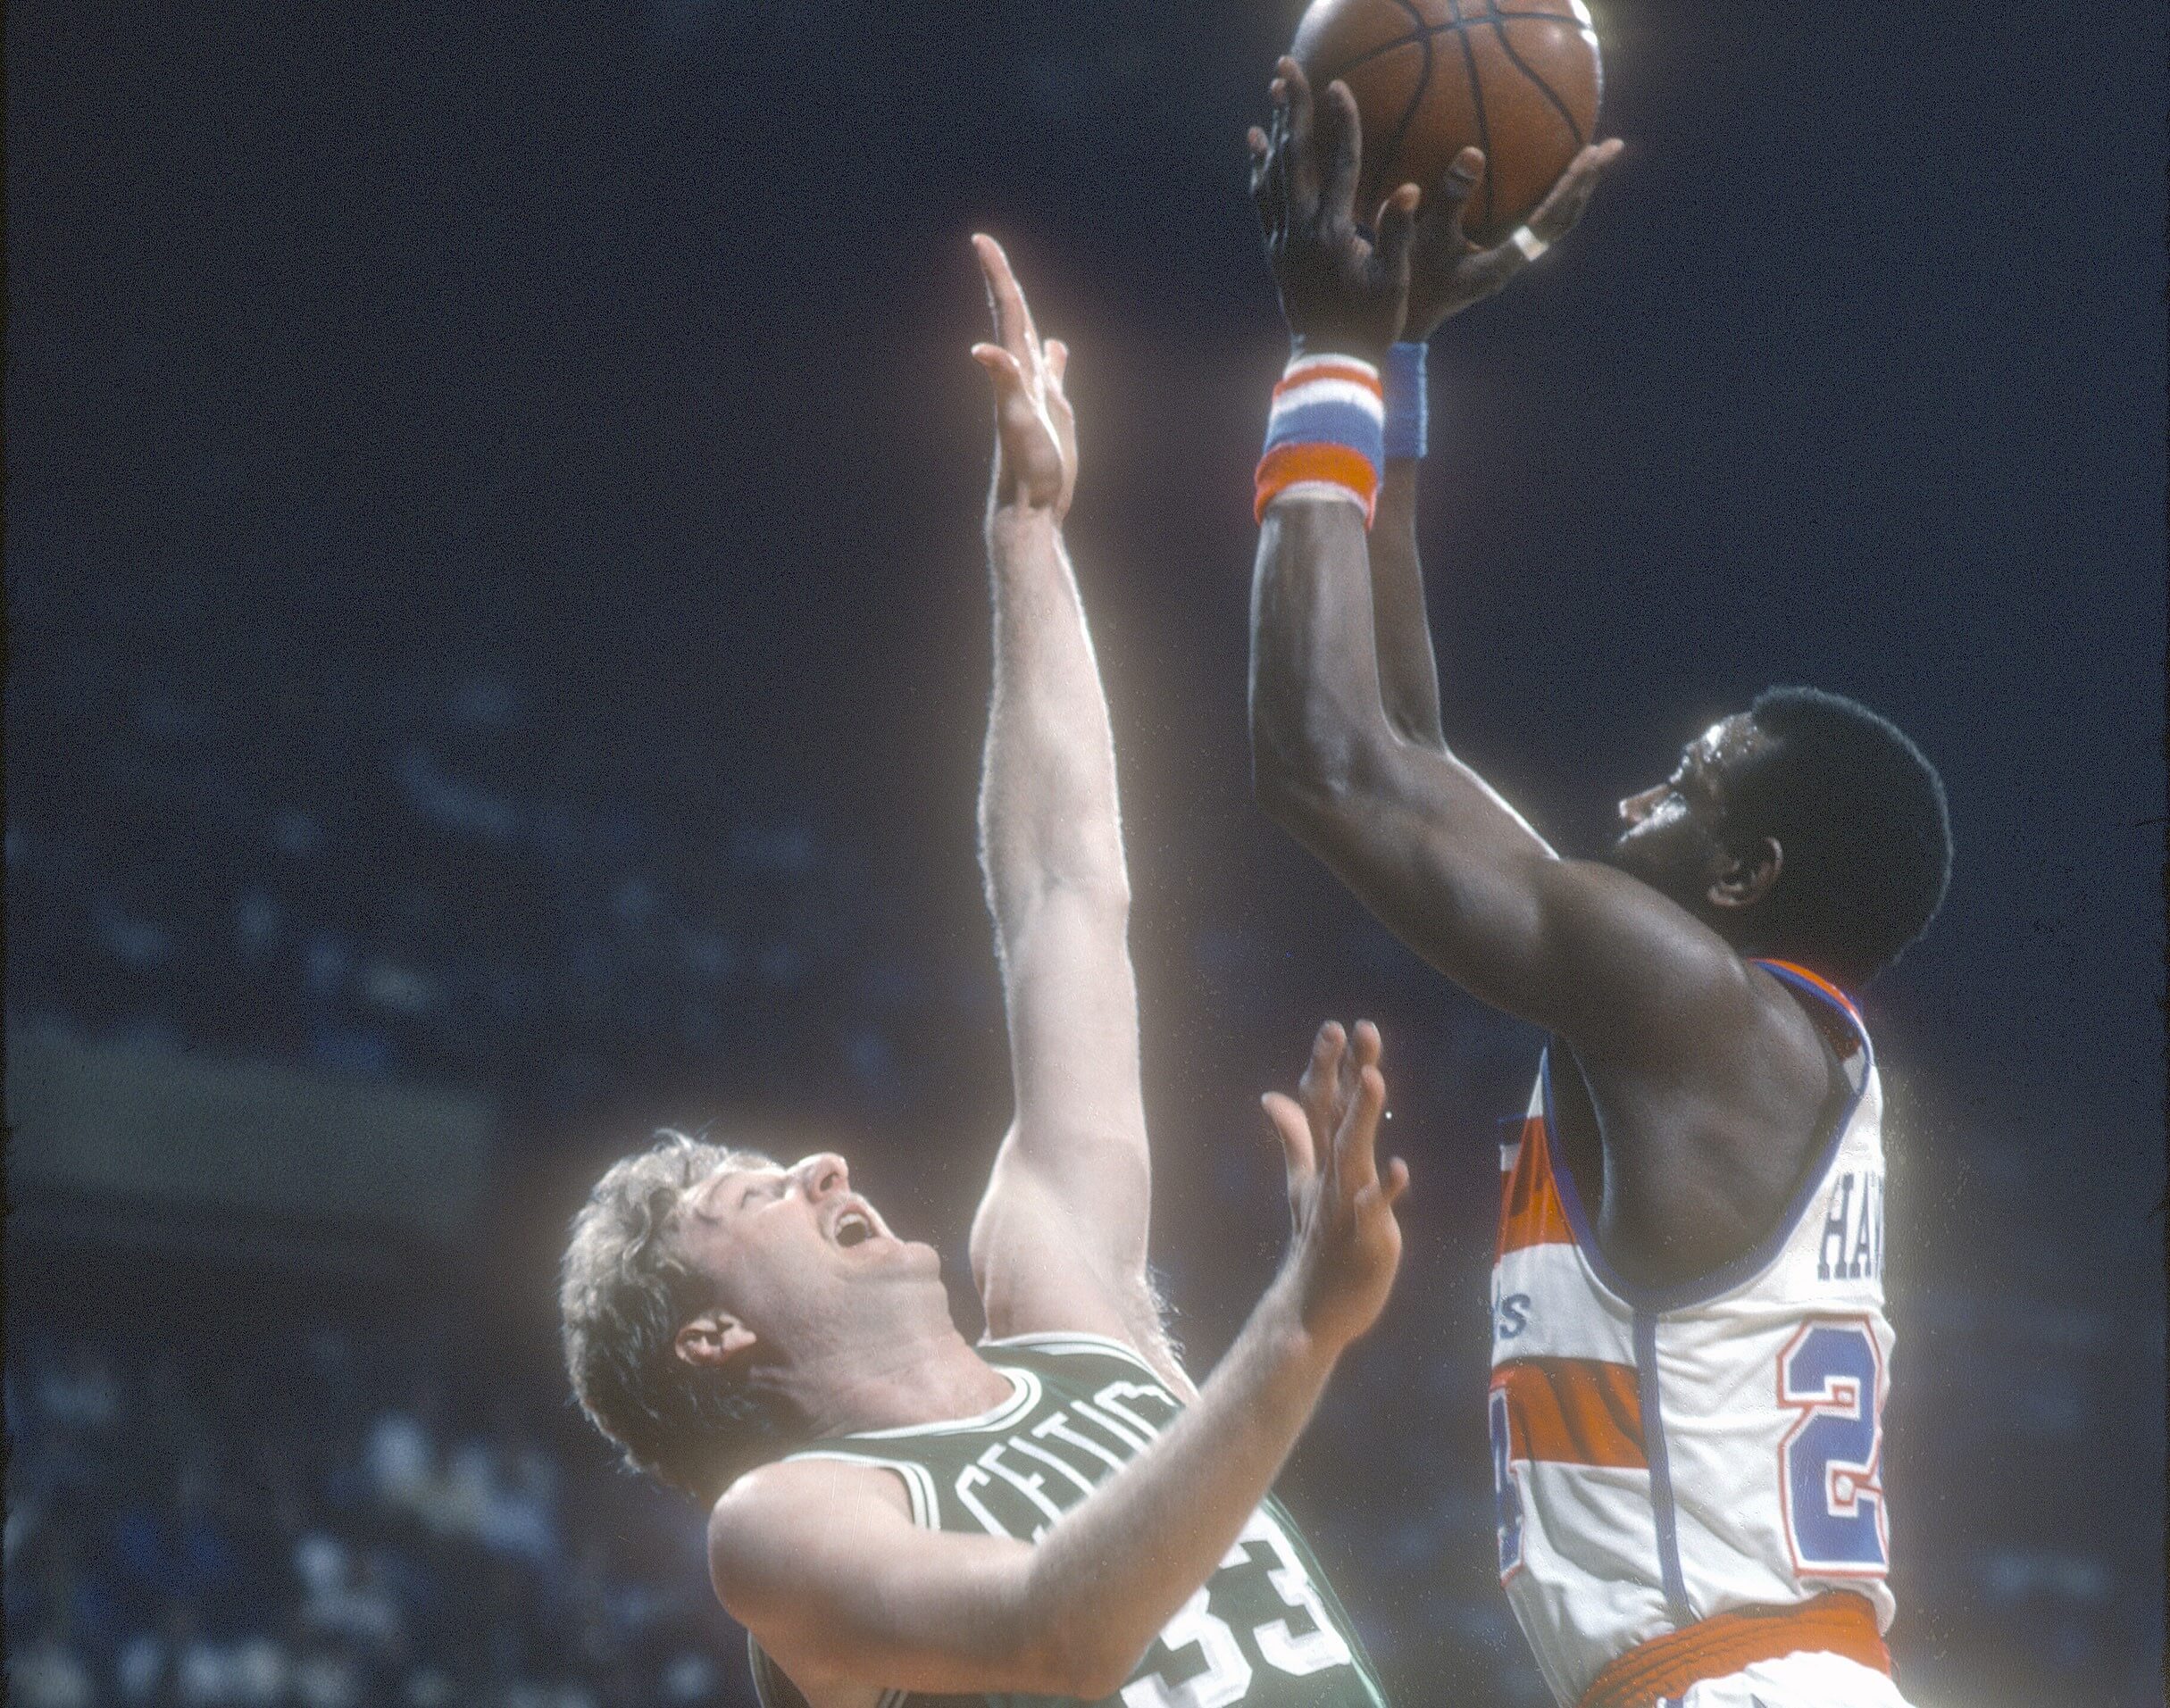 Spencer Haywood of the Washington Bullets shoots over Larry Bird of the Boston Celtics.